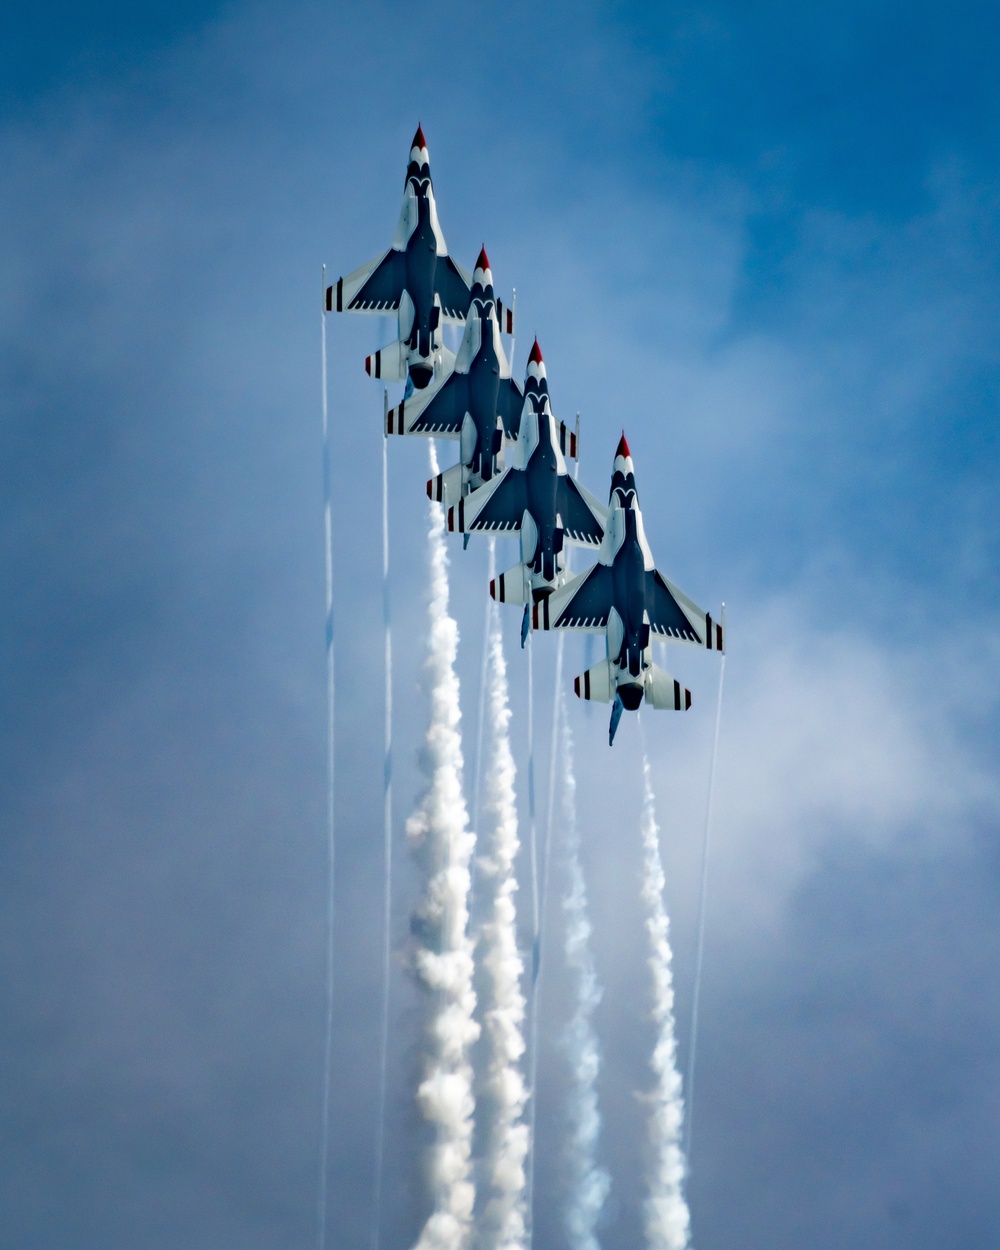 Thunderbirds kick-off 2021 Air Show season in Cocoa Beach